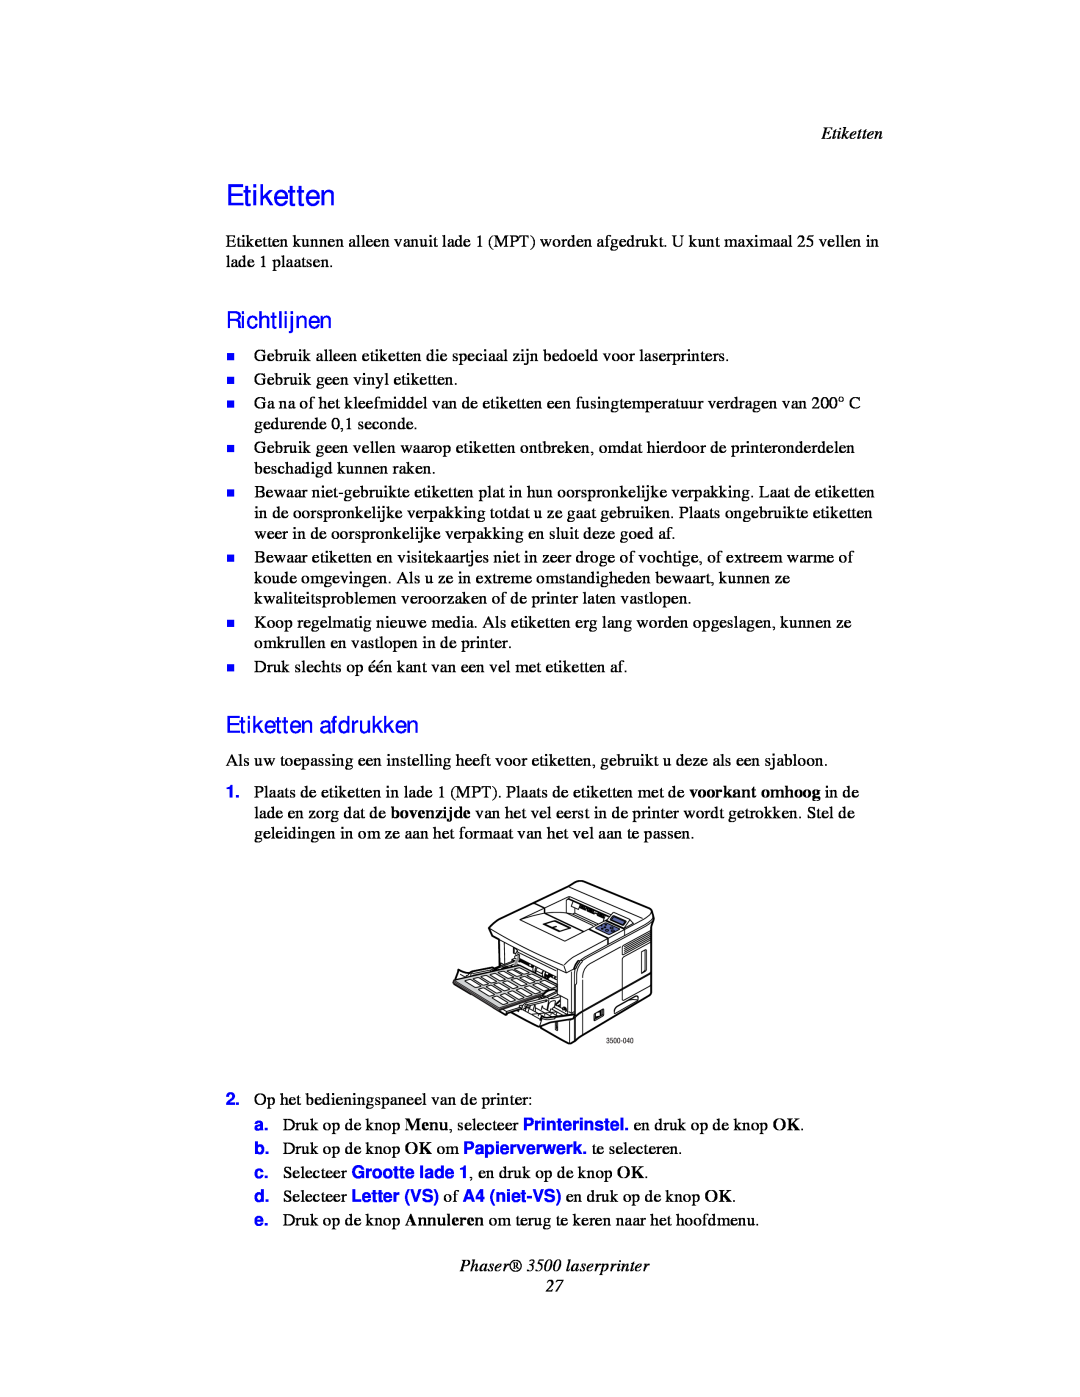 Xerox manual Etiketten afdrukken, Richtlijnen, Phaser 3500 laserprinter 